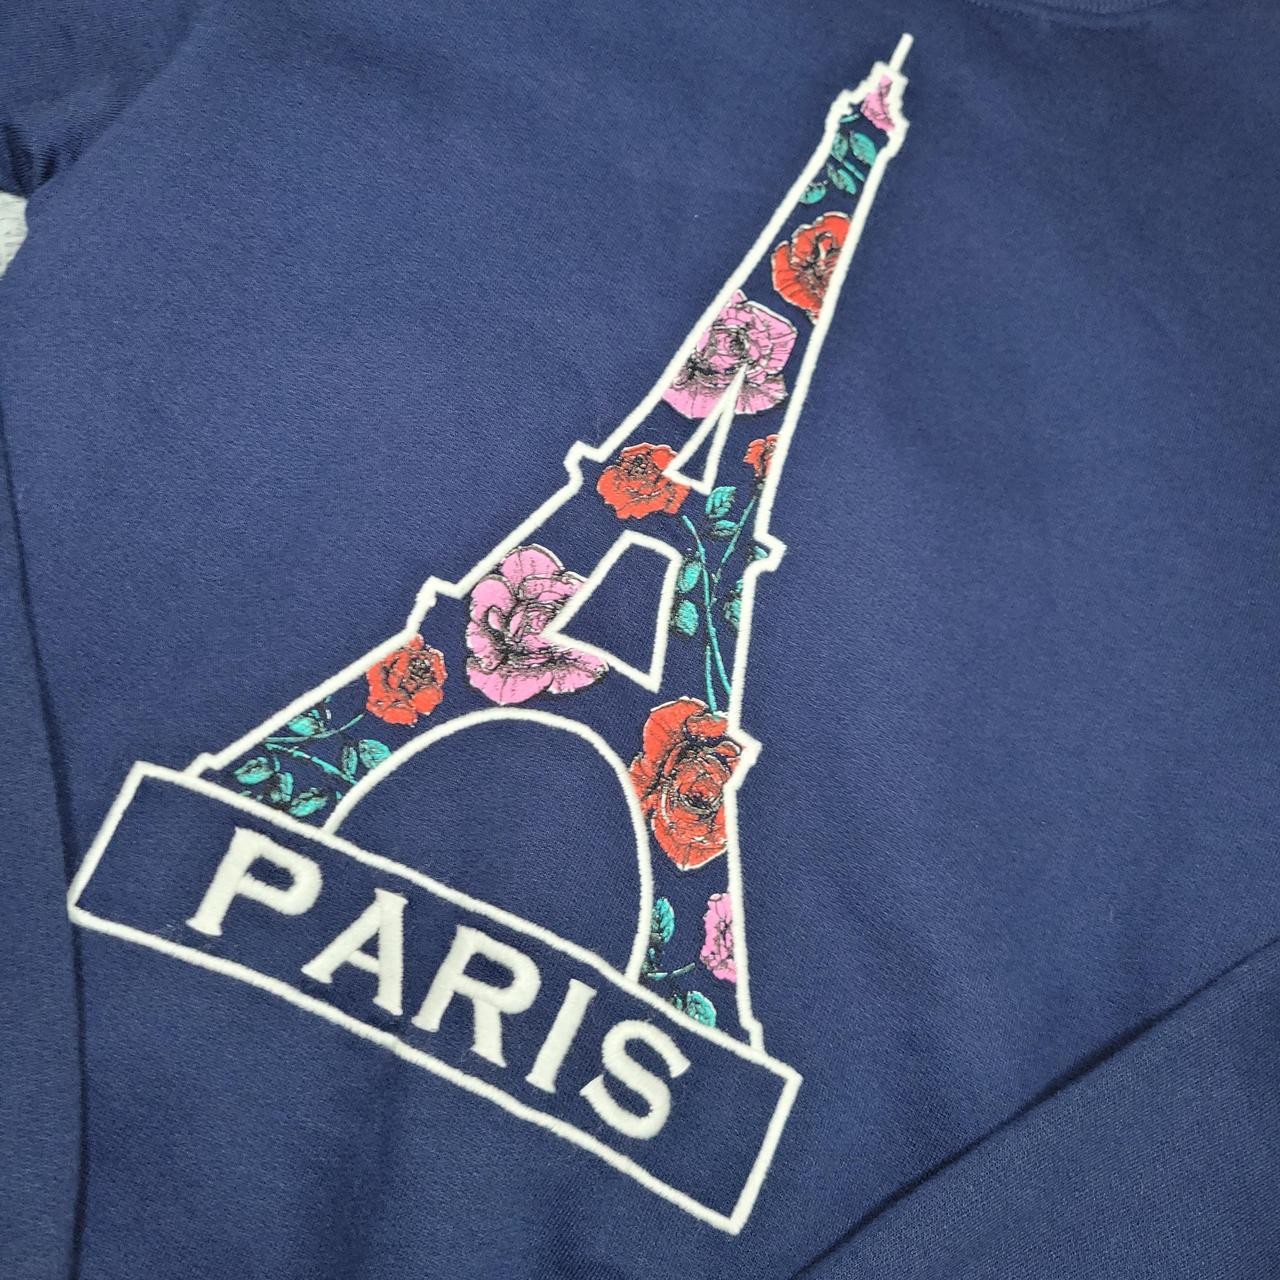 Product Image 2 - Eiffel Tower Paris crewneck

#pullover #sweatshirt